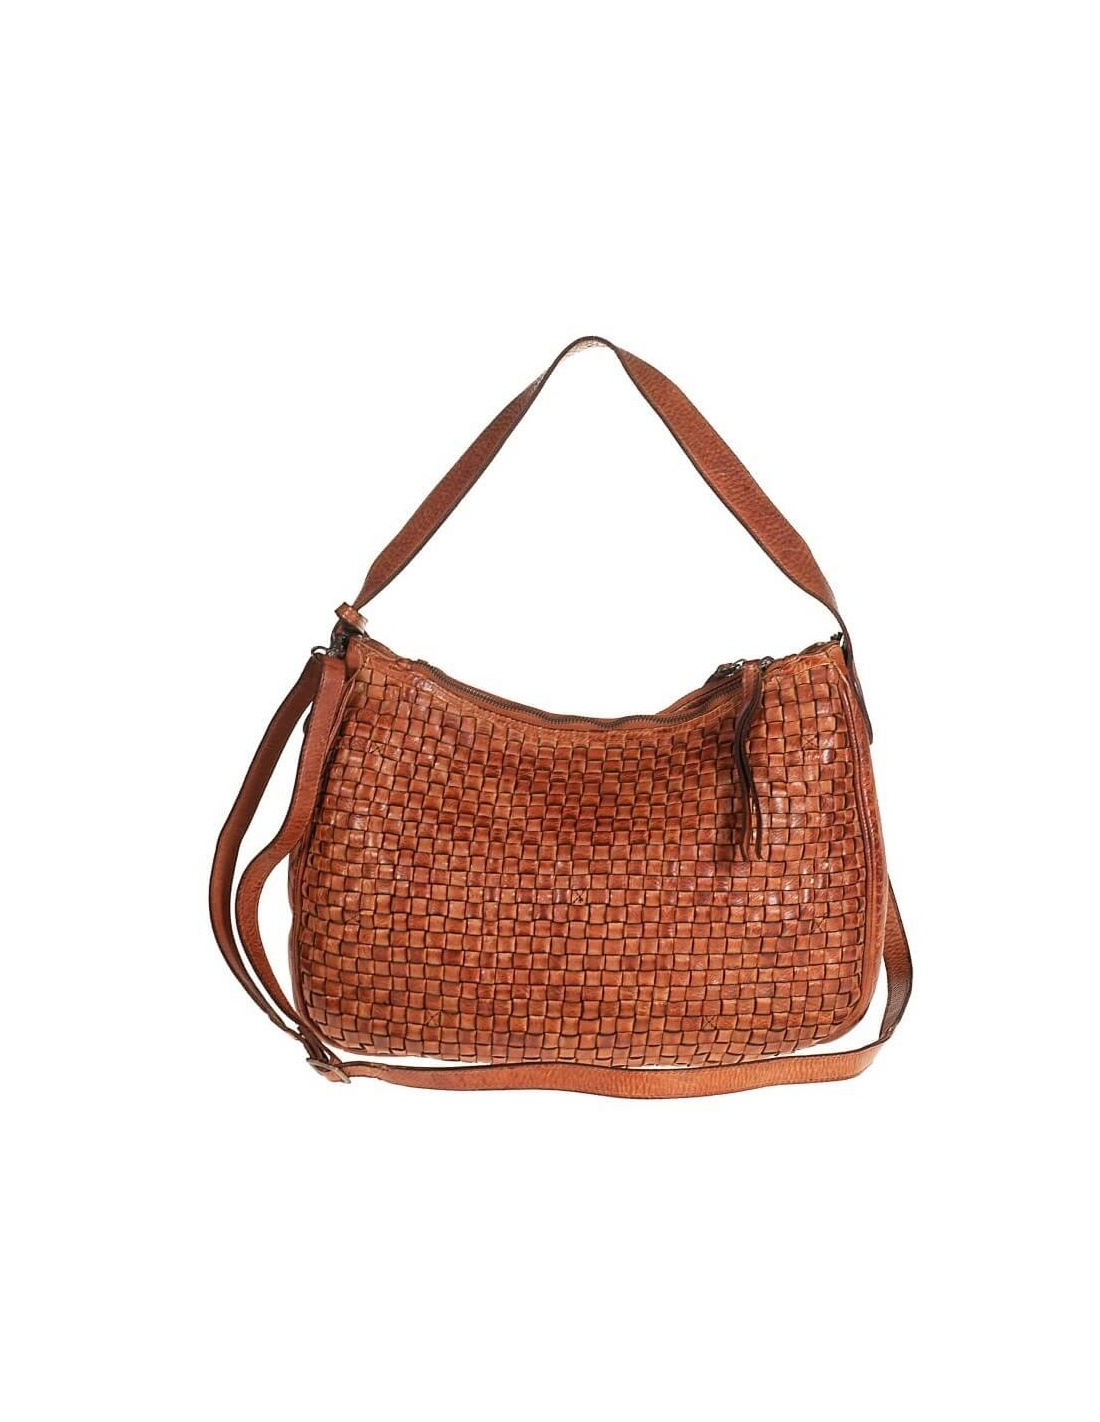 Leather Woven Shoulder Bag, Leather Handbags